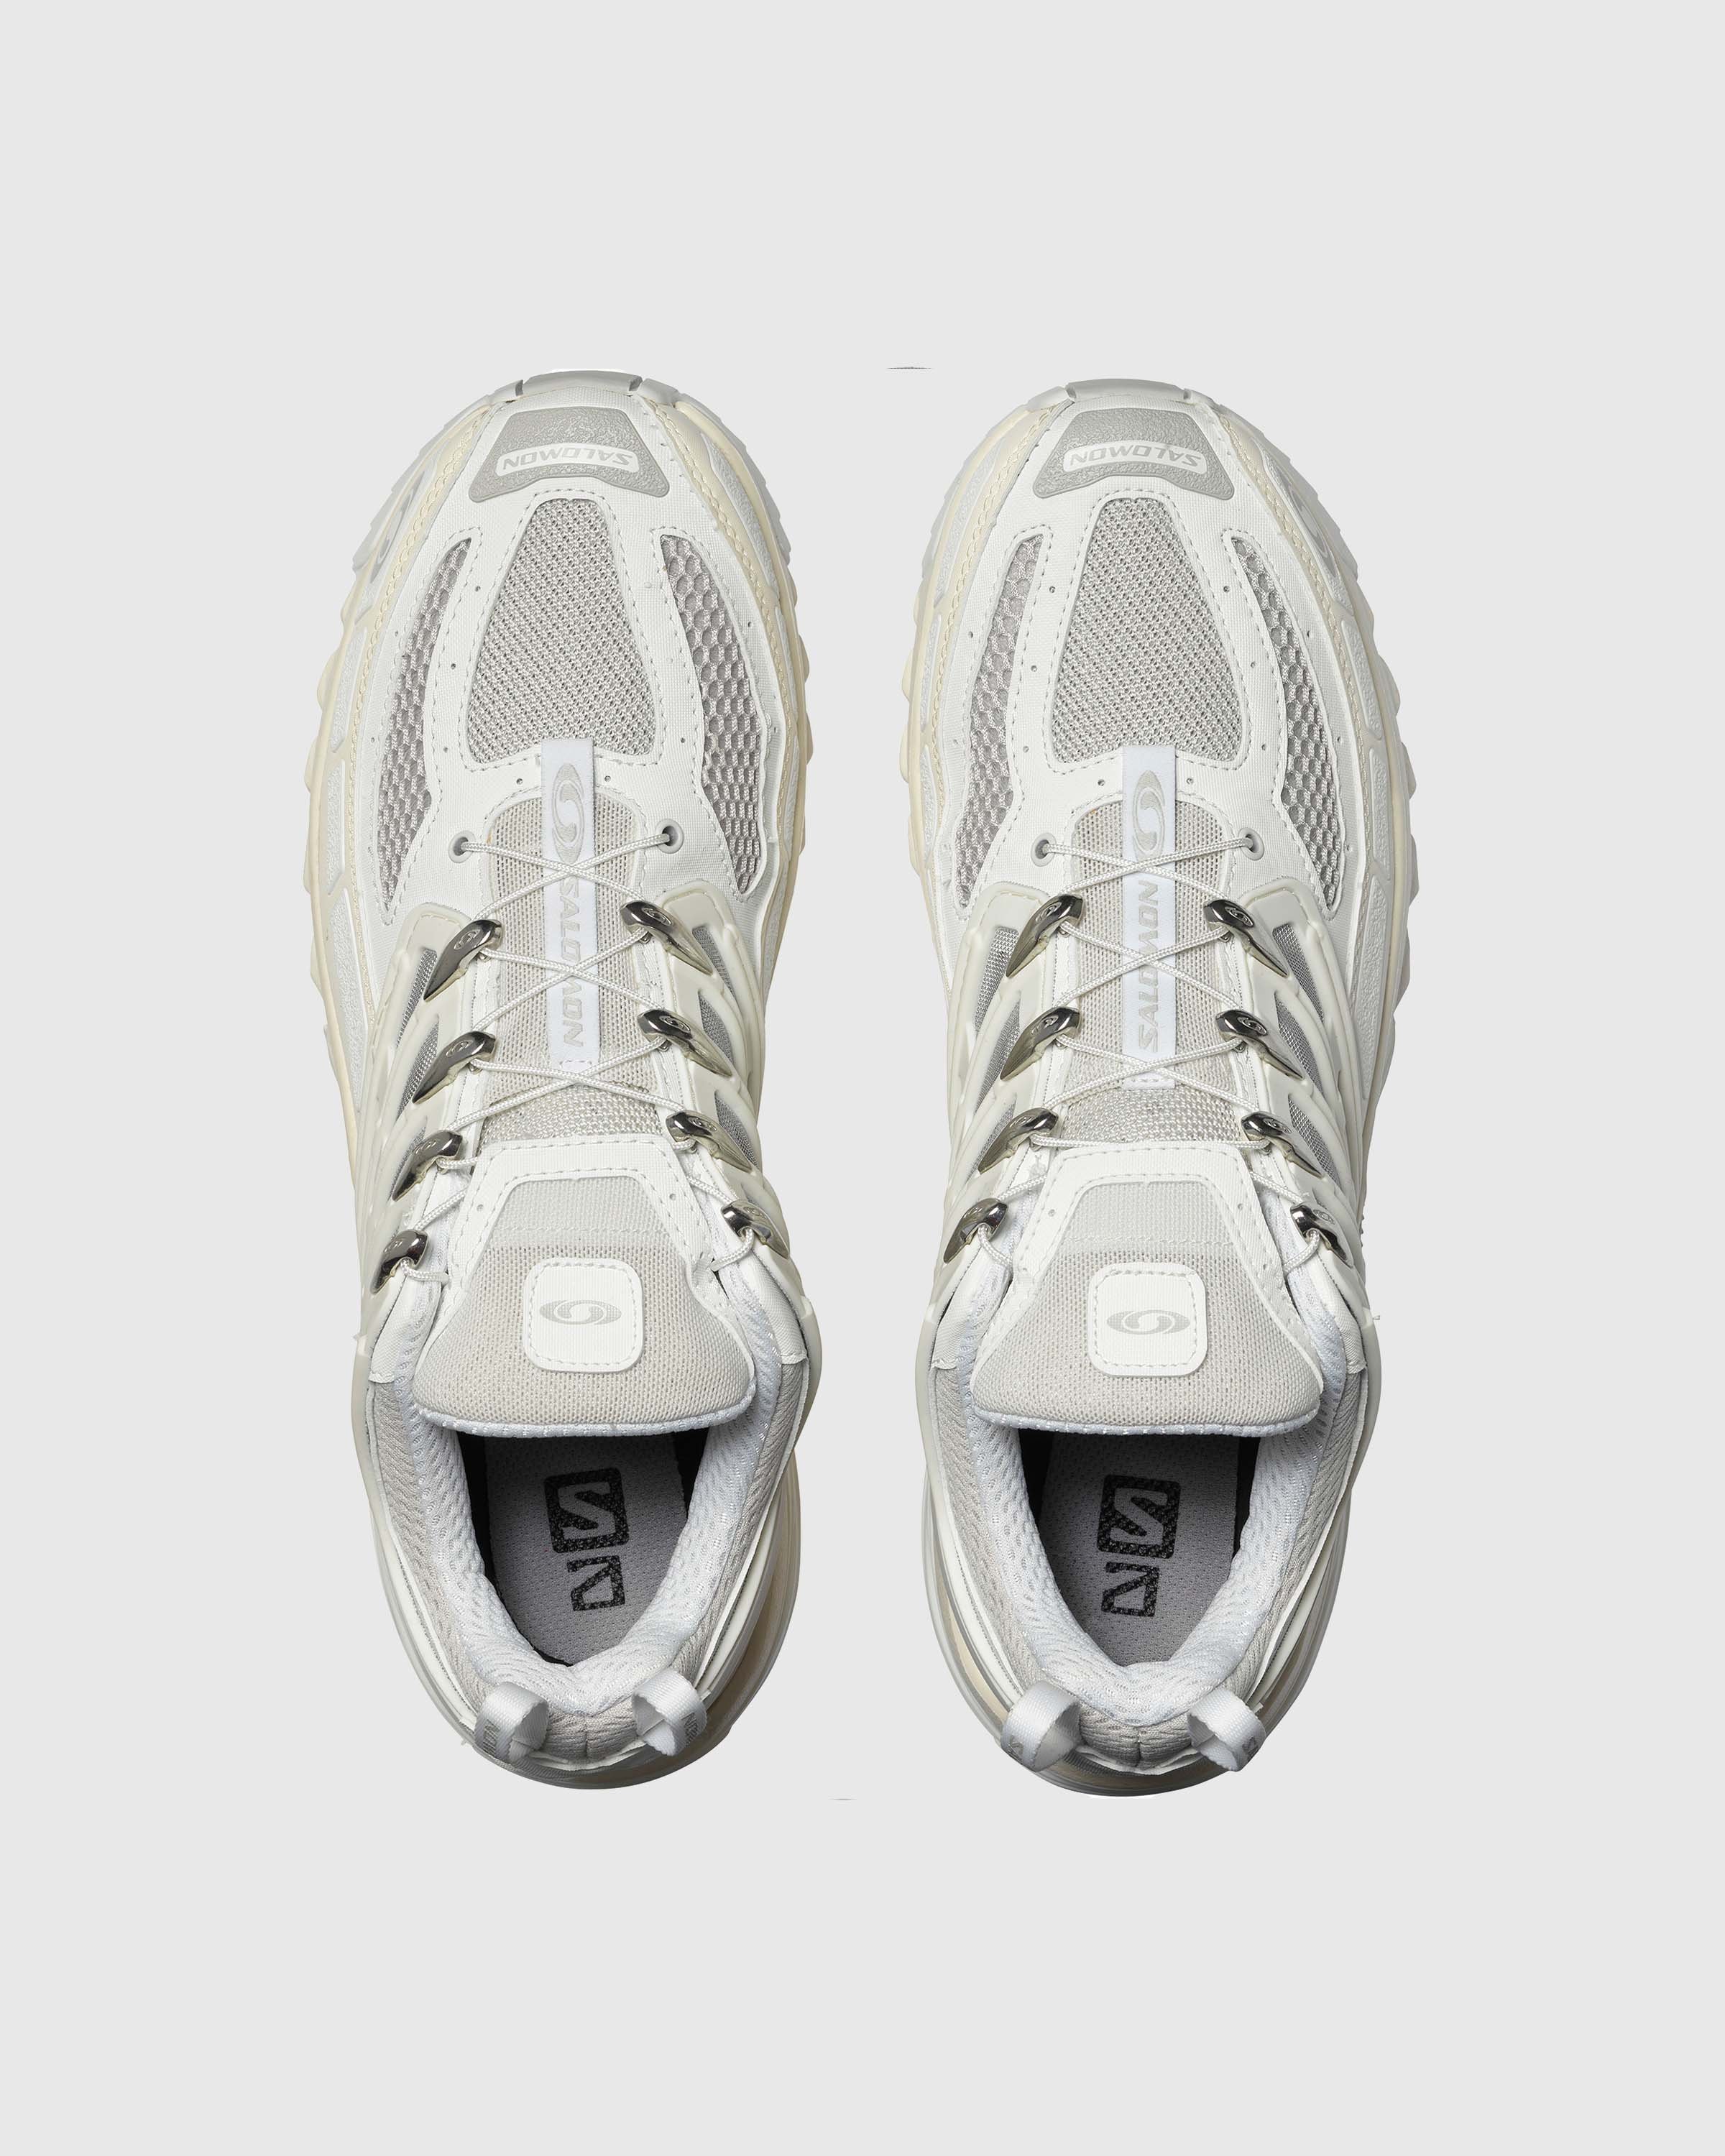 Salomon - ACS PRO White/Vanilla Ice/Lunar Rock - Footwear - White - Image 4